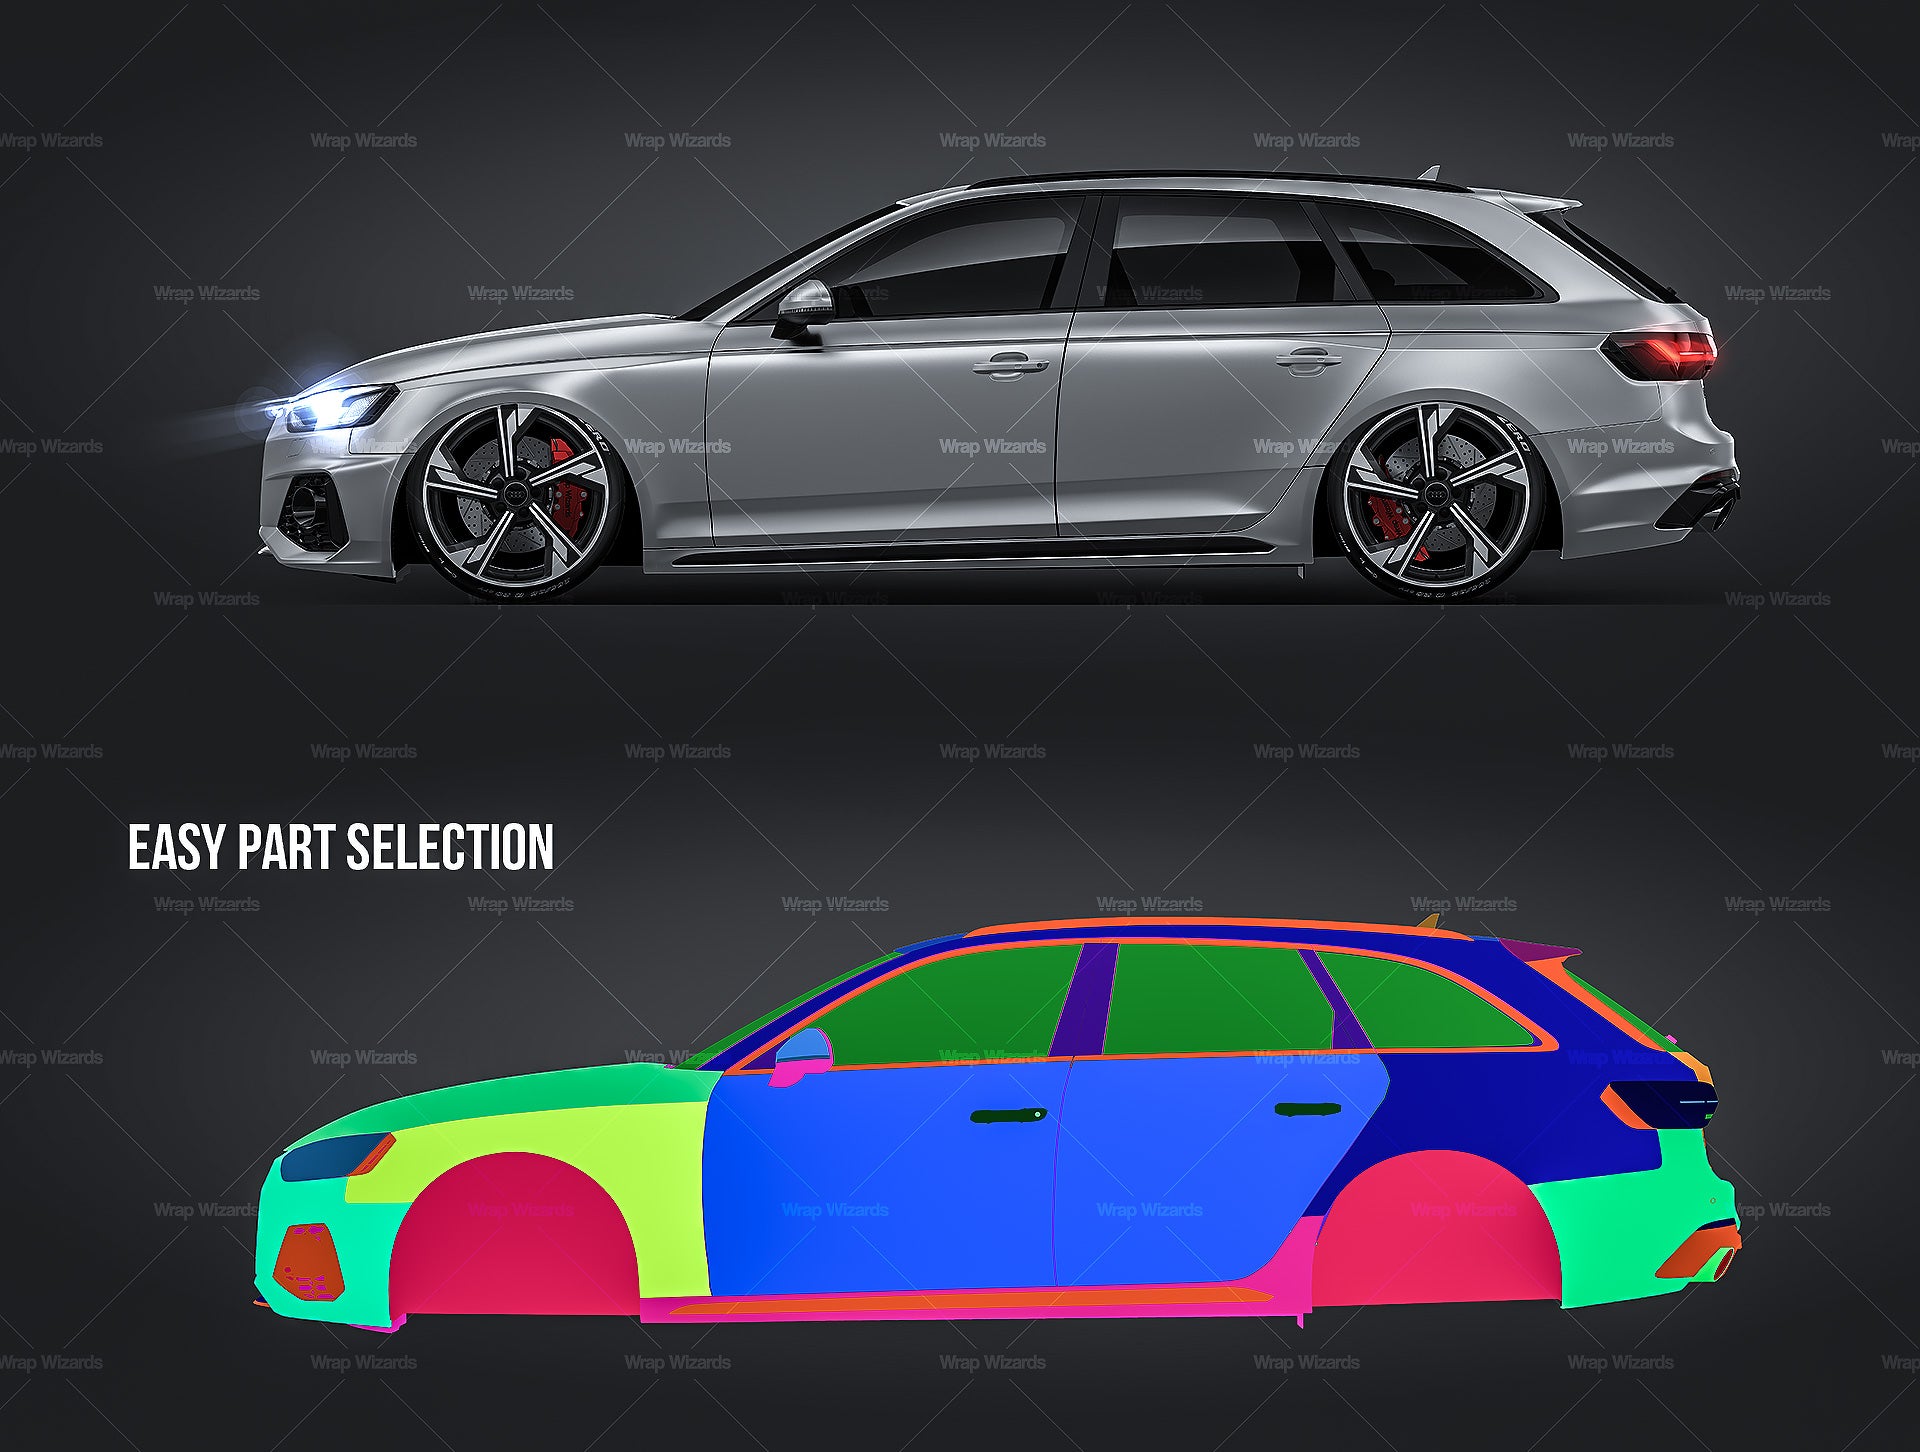 Audi RS4 Avant 2020 satin matt finish - all sides Car Mockup Template.psd